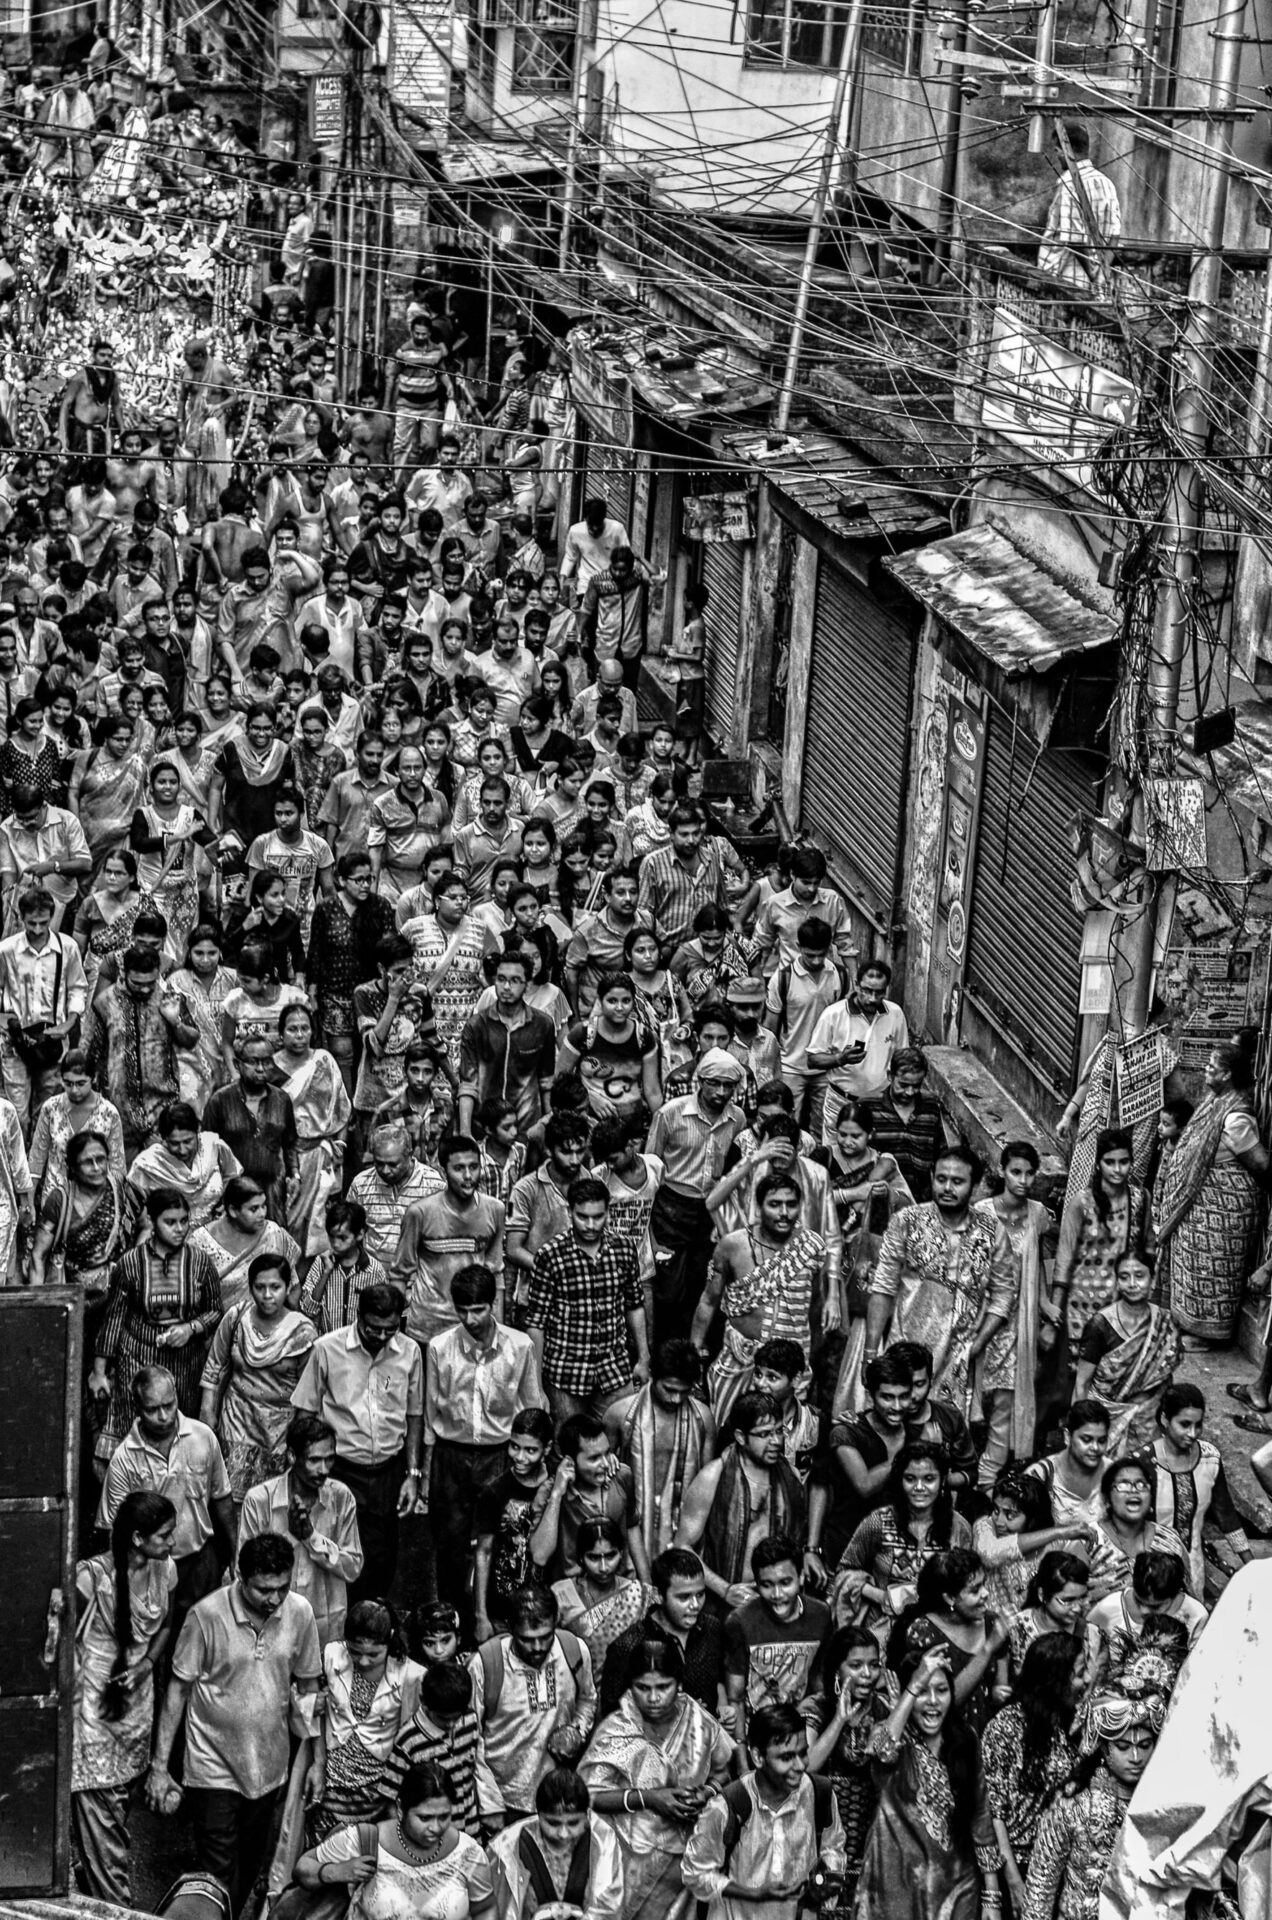 Photograph of busy street in Kolkata, India